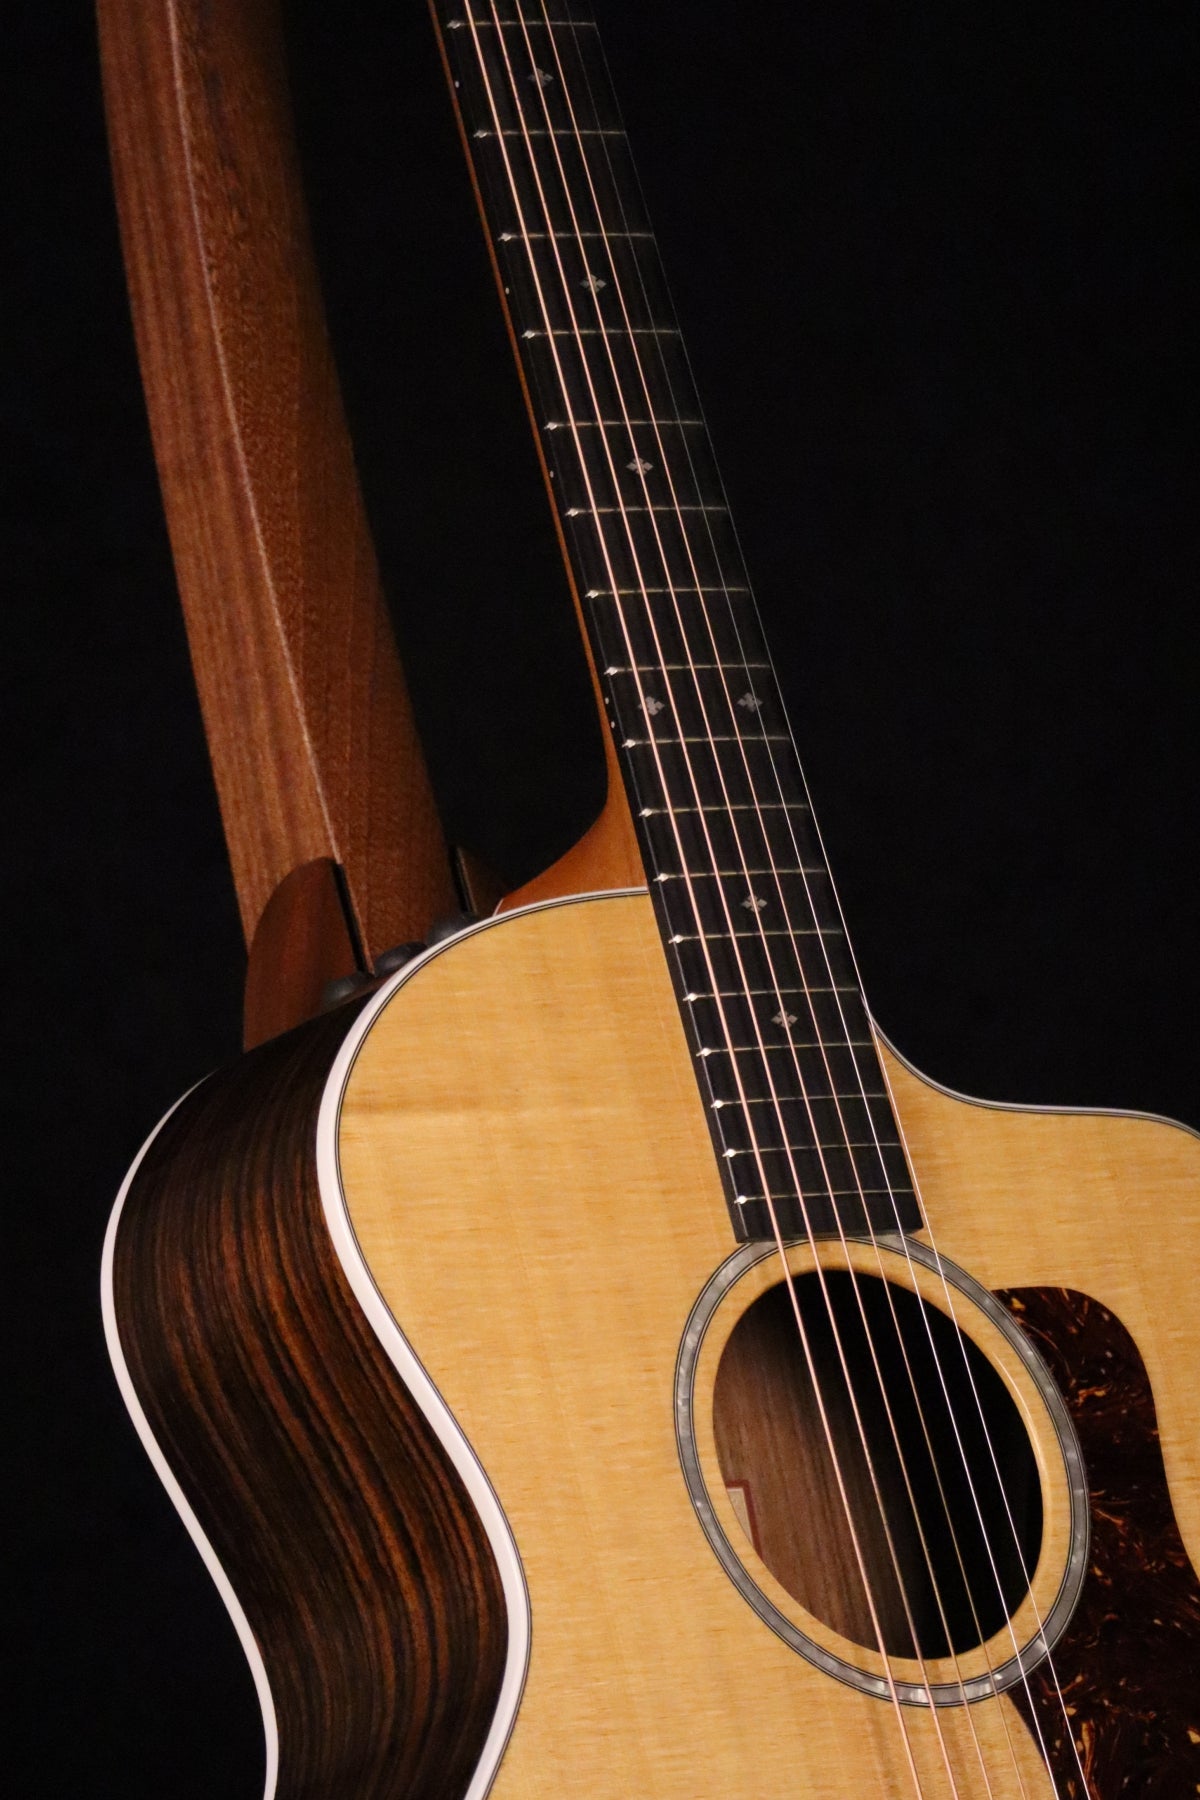 Folding sapele mahogany wood guitar floor stand closeup front image with Taylor guitar